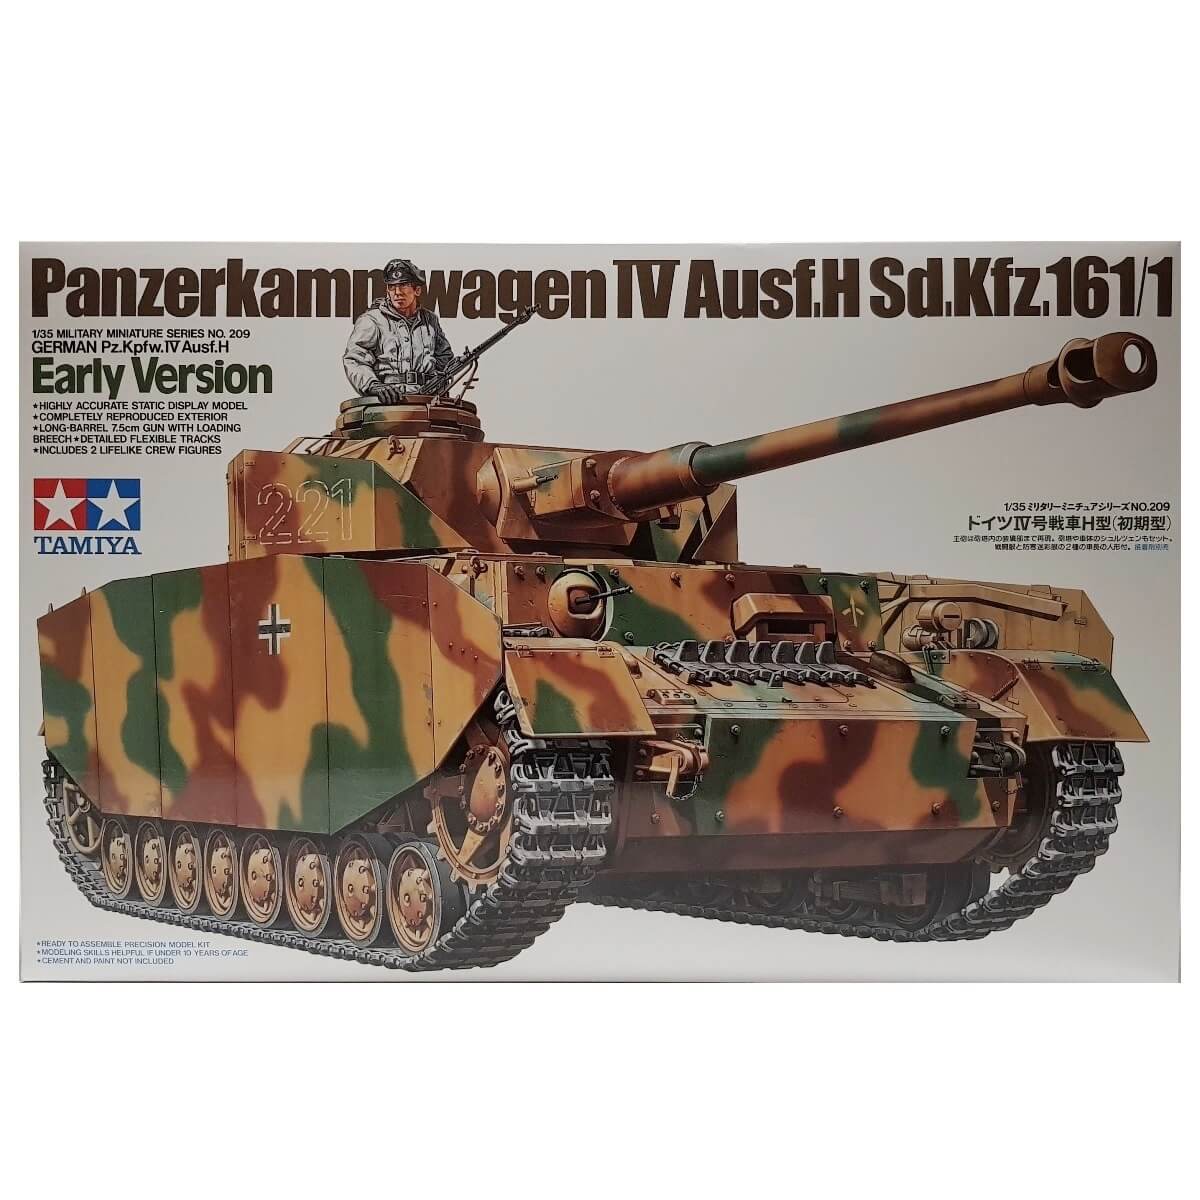 1:35 Sd.Kfz. 161/1 Panzerkampfwagen IV Ausf. H - Early Version - TAMIYA